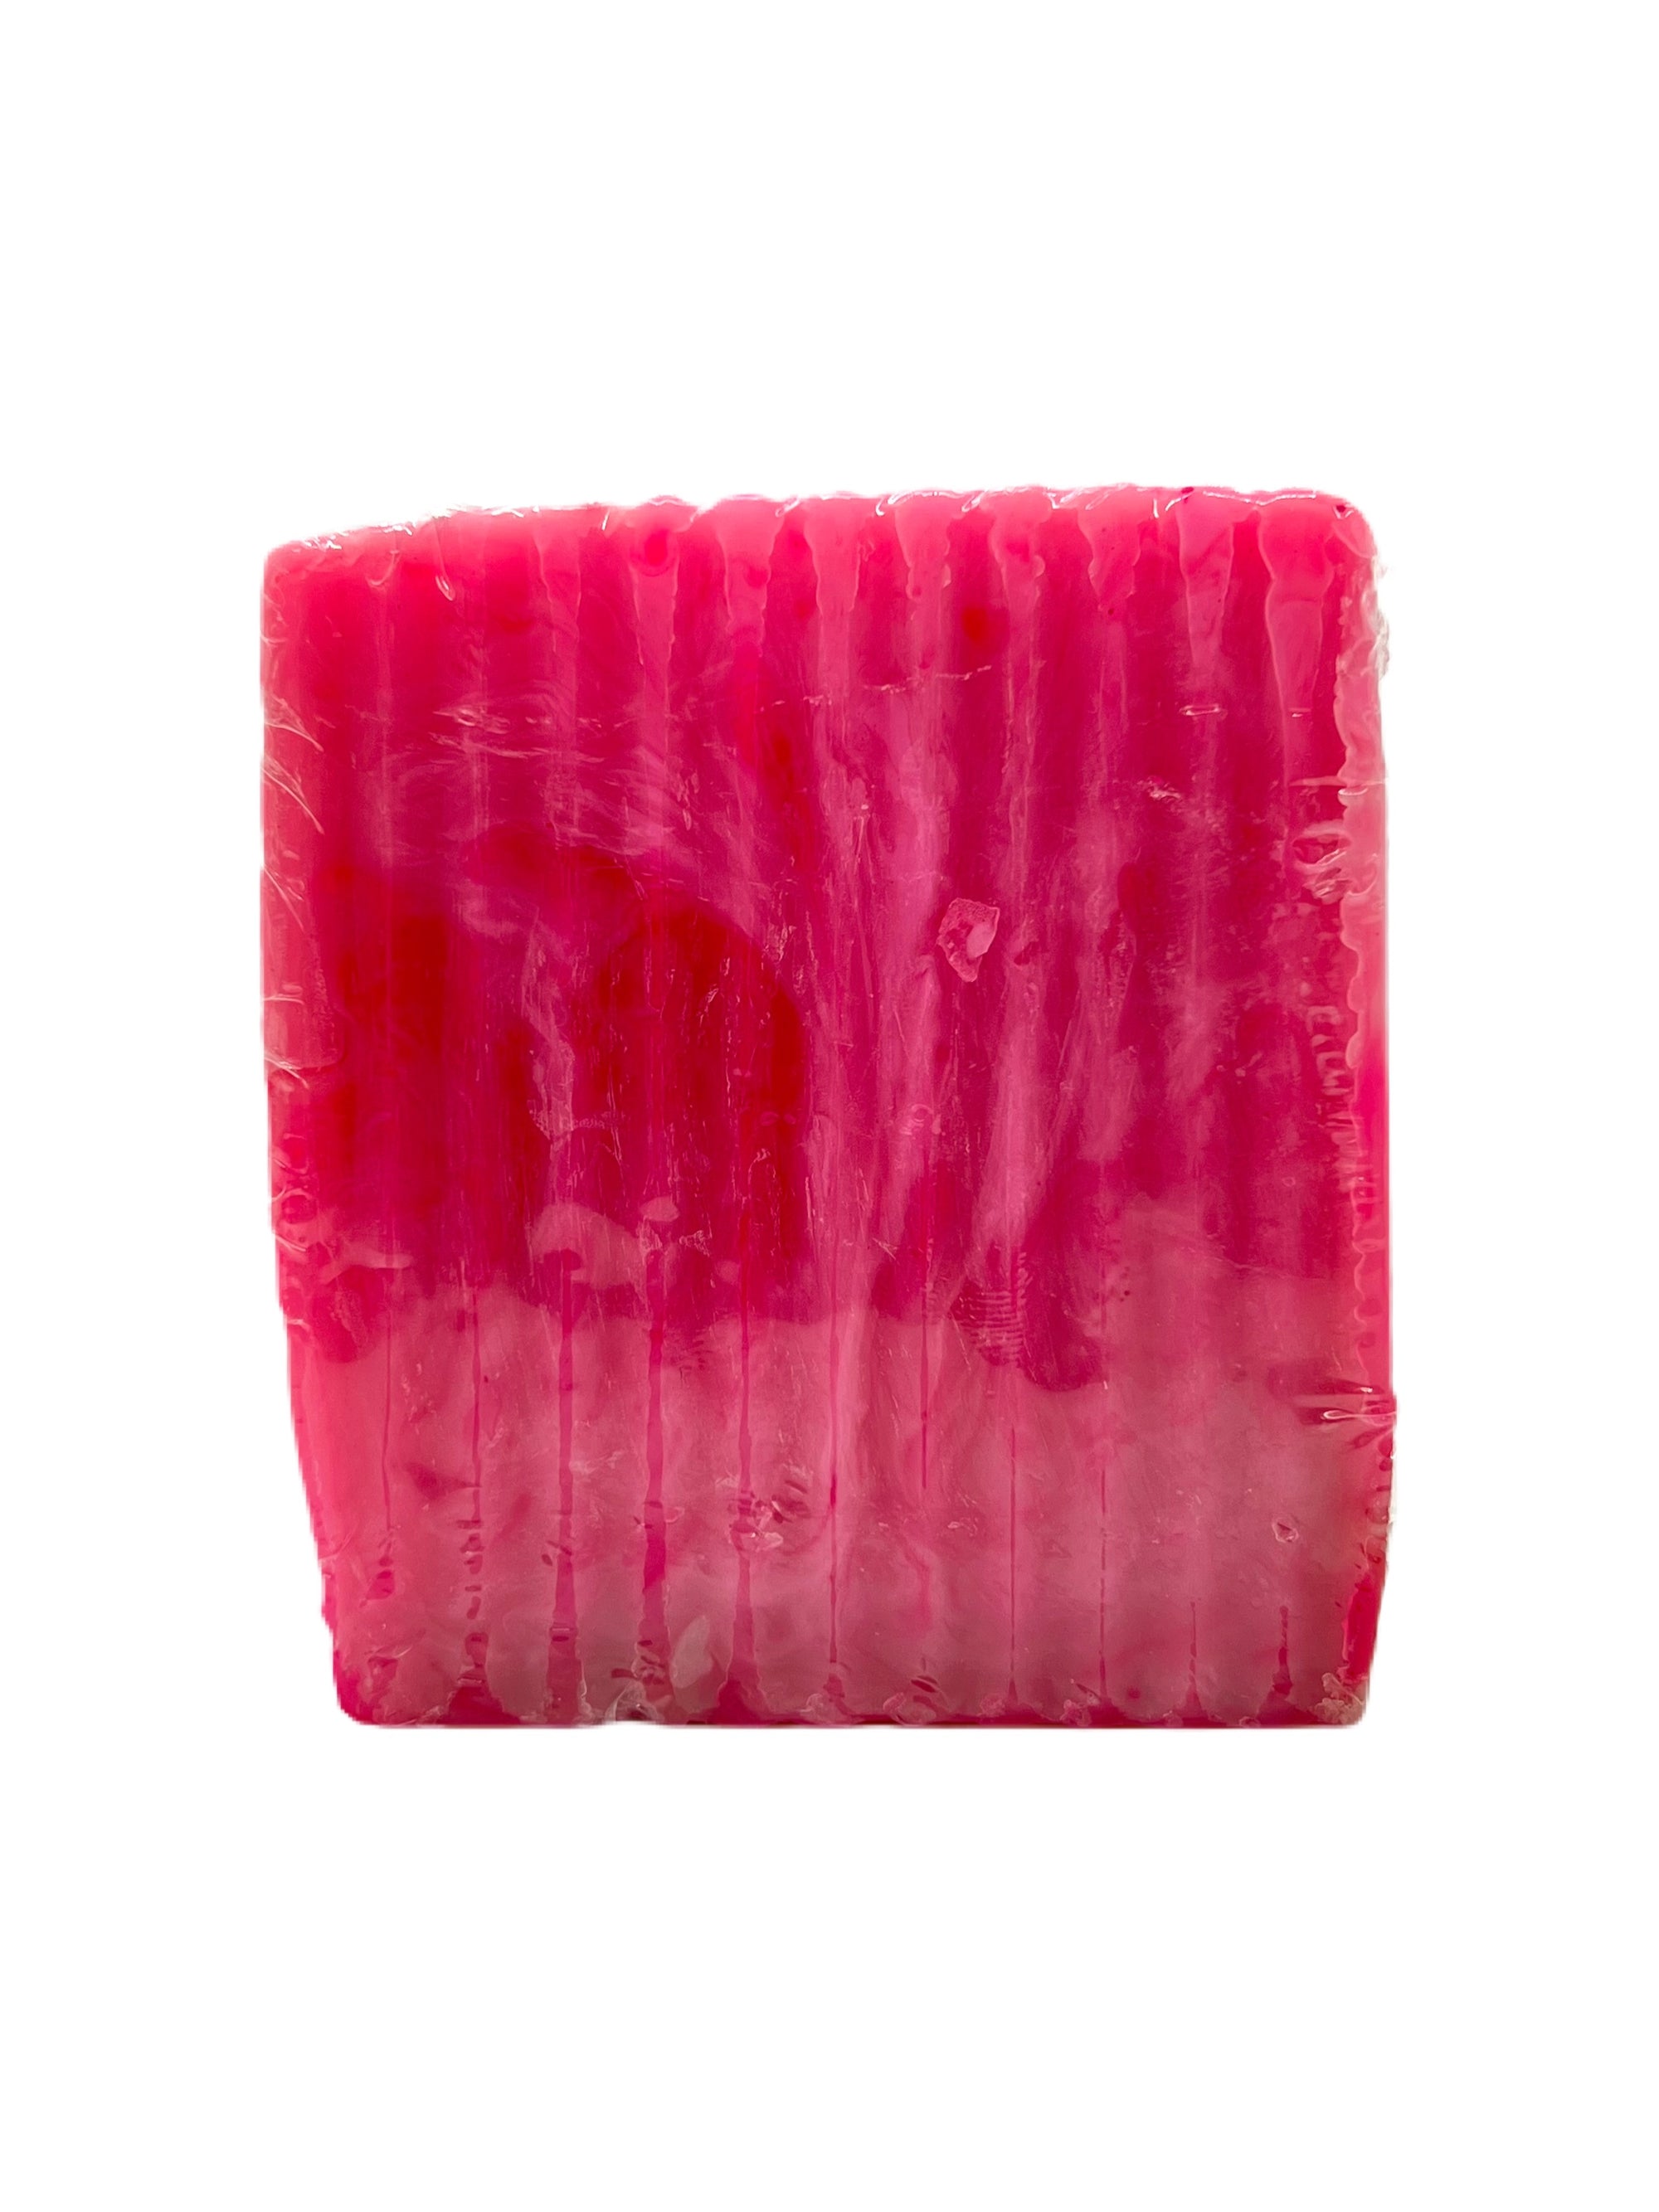 Pink Suga Bath Soap